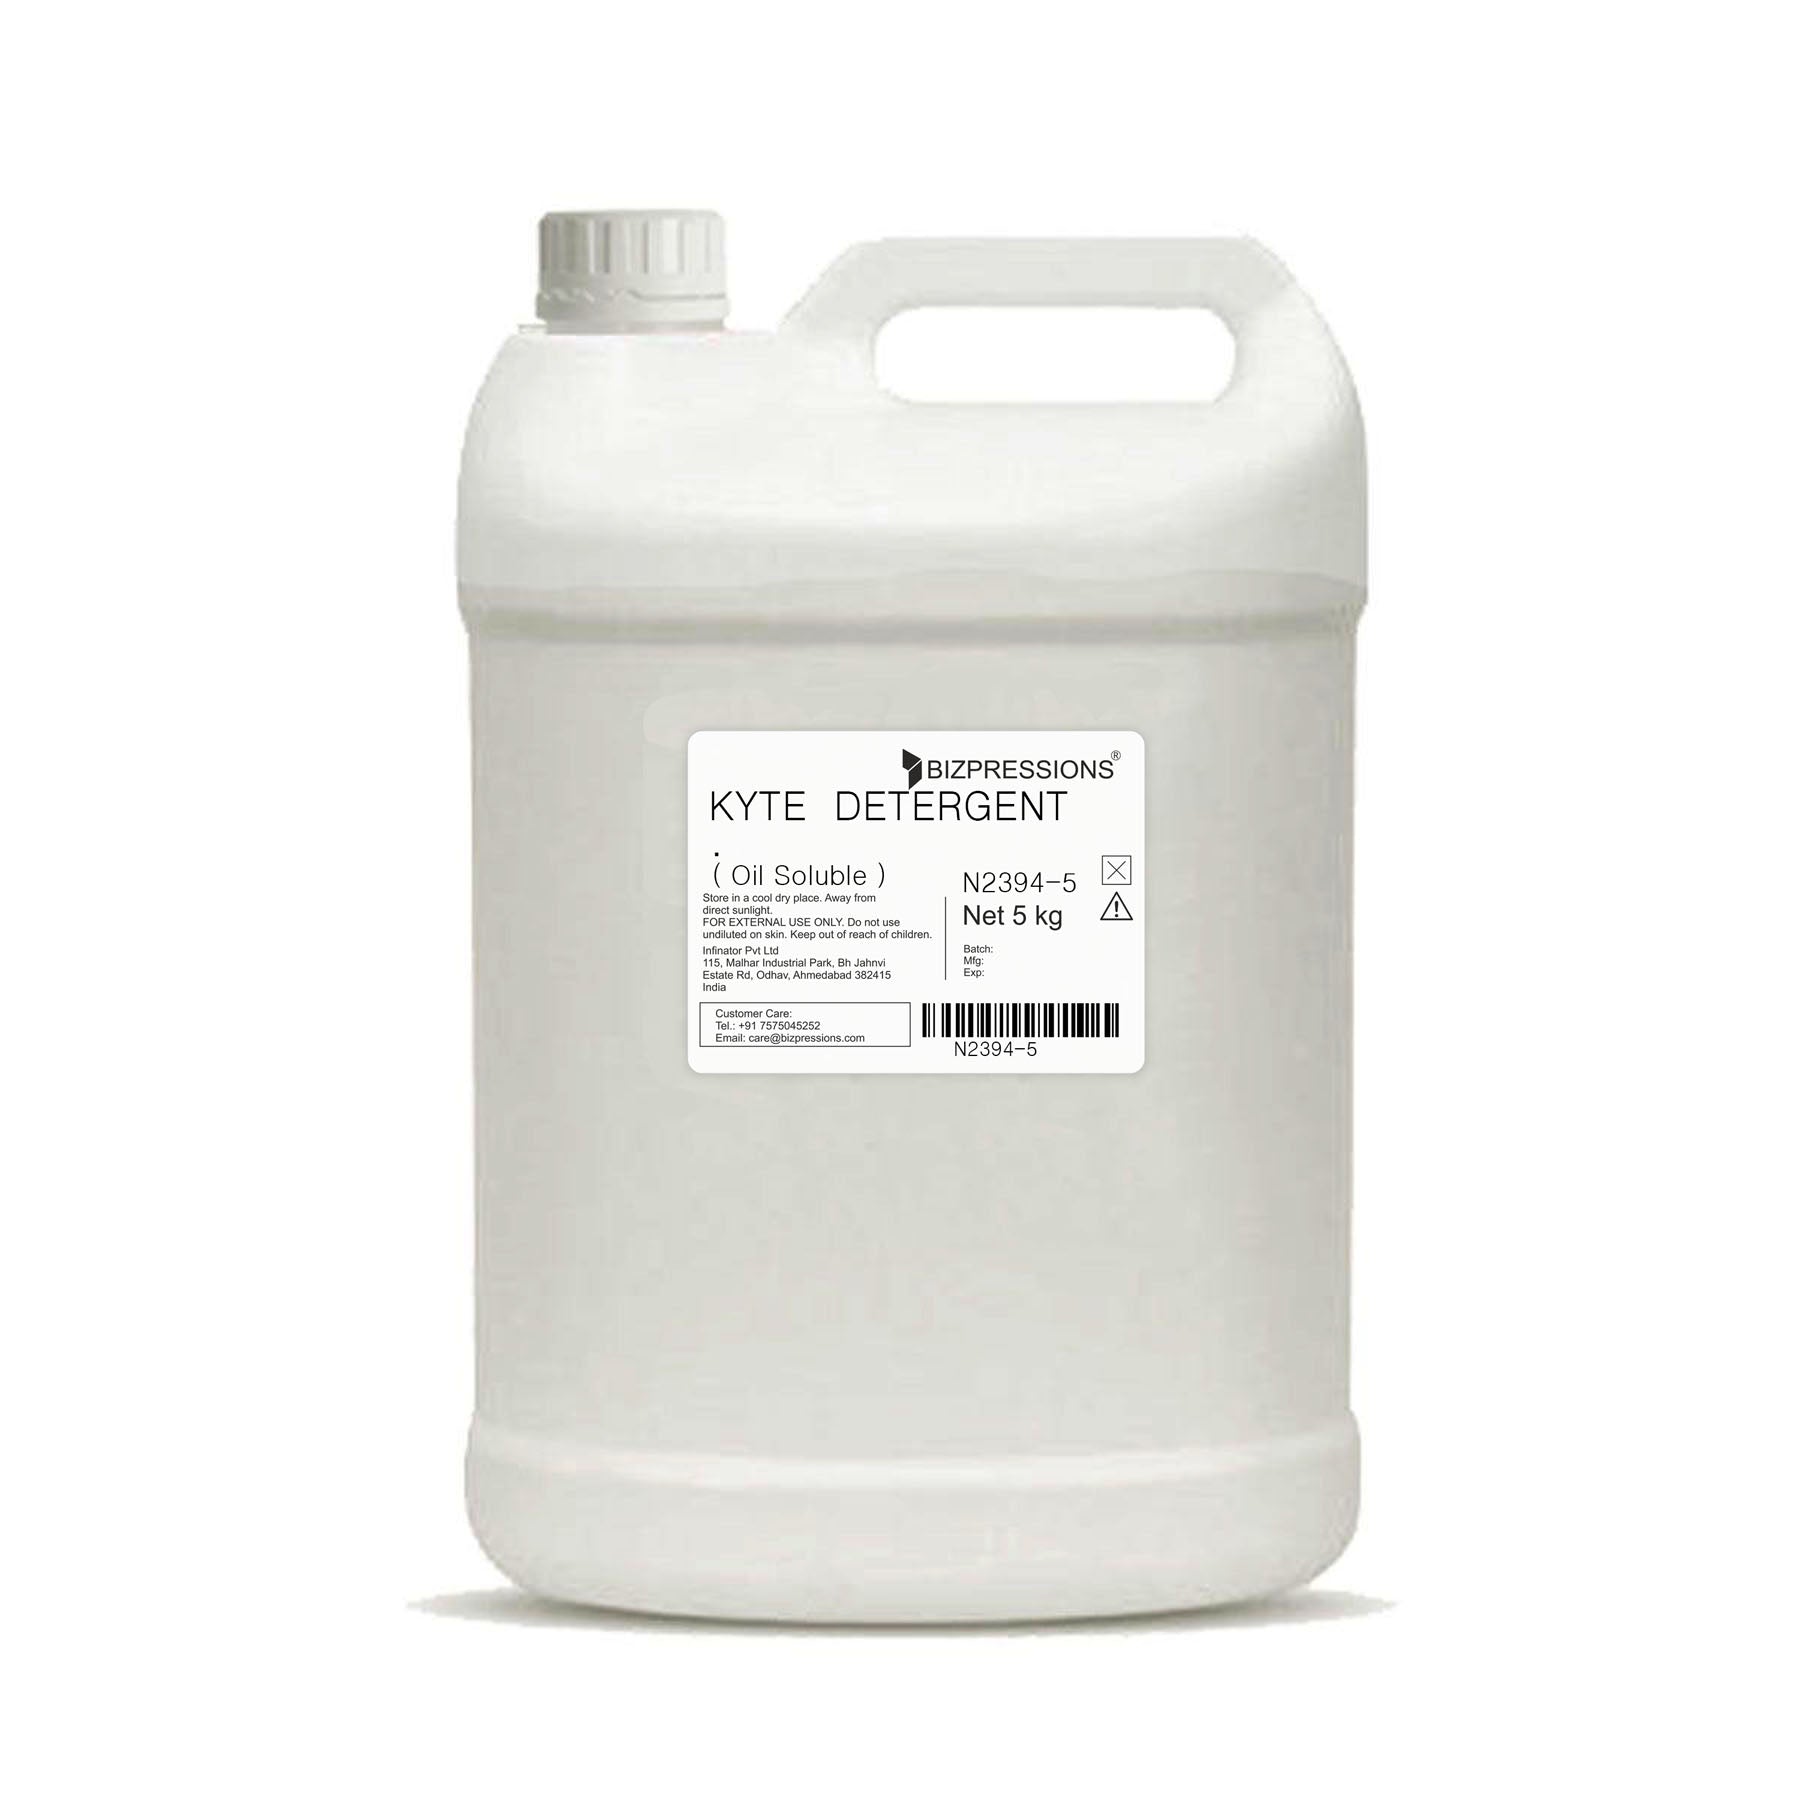 KYTE DETERGENT - Fragrance ( Oil Soluble ) - 5 kg